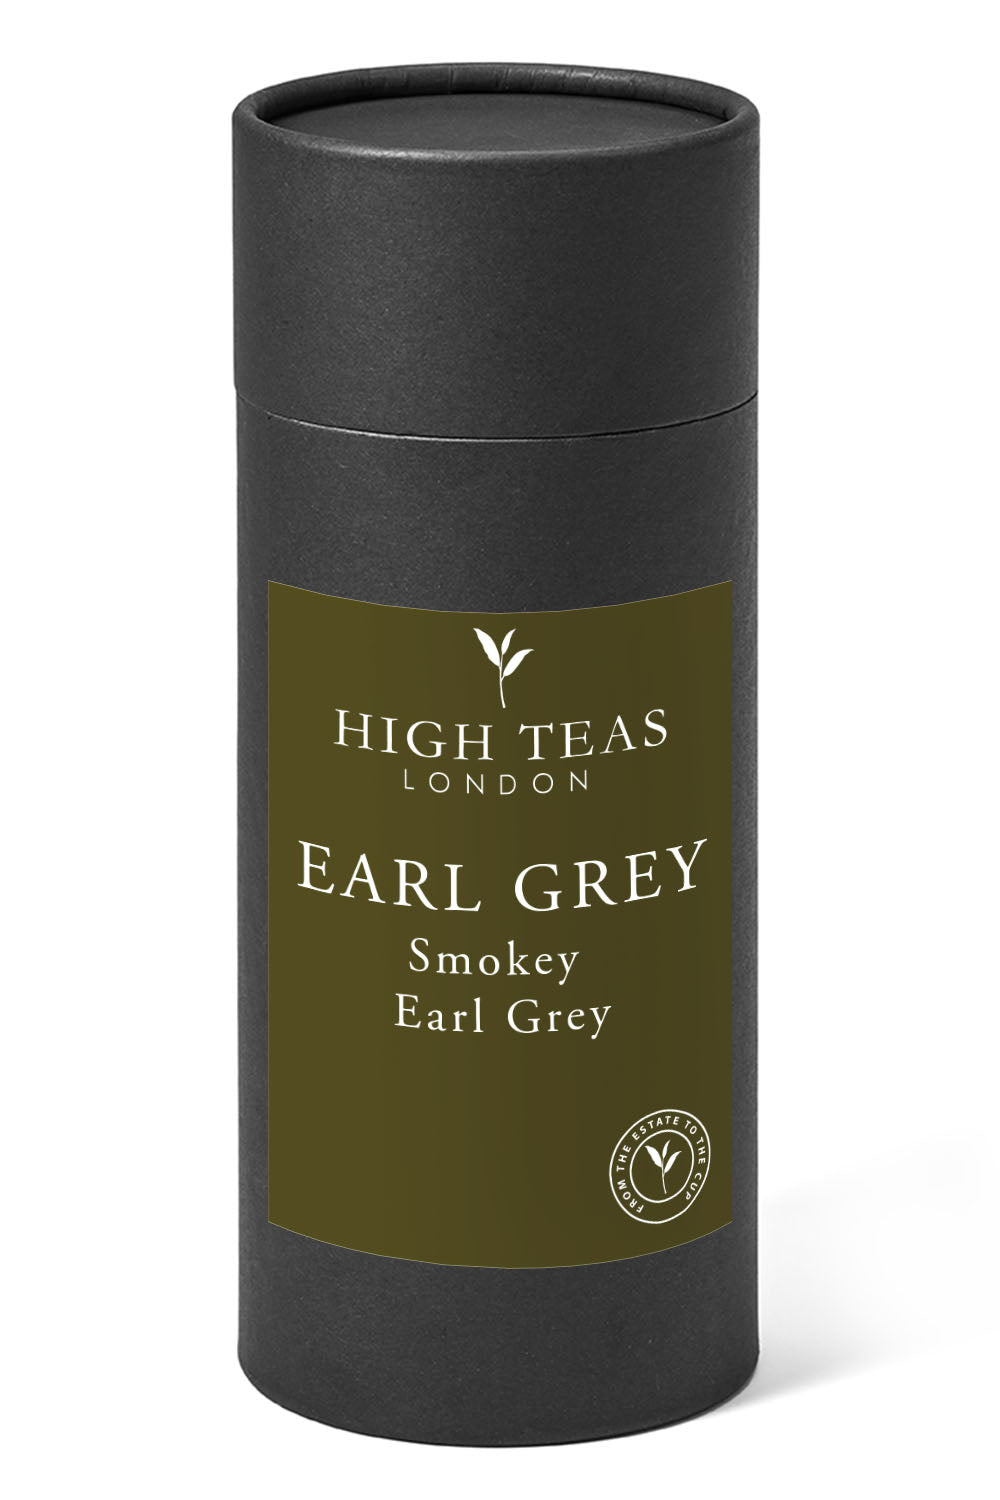 Smoky Earl Grey-150g gift-Loose Leaf Tea-High Teas